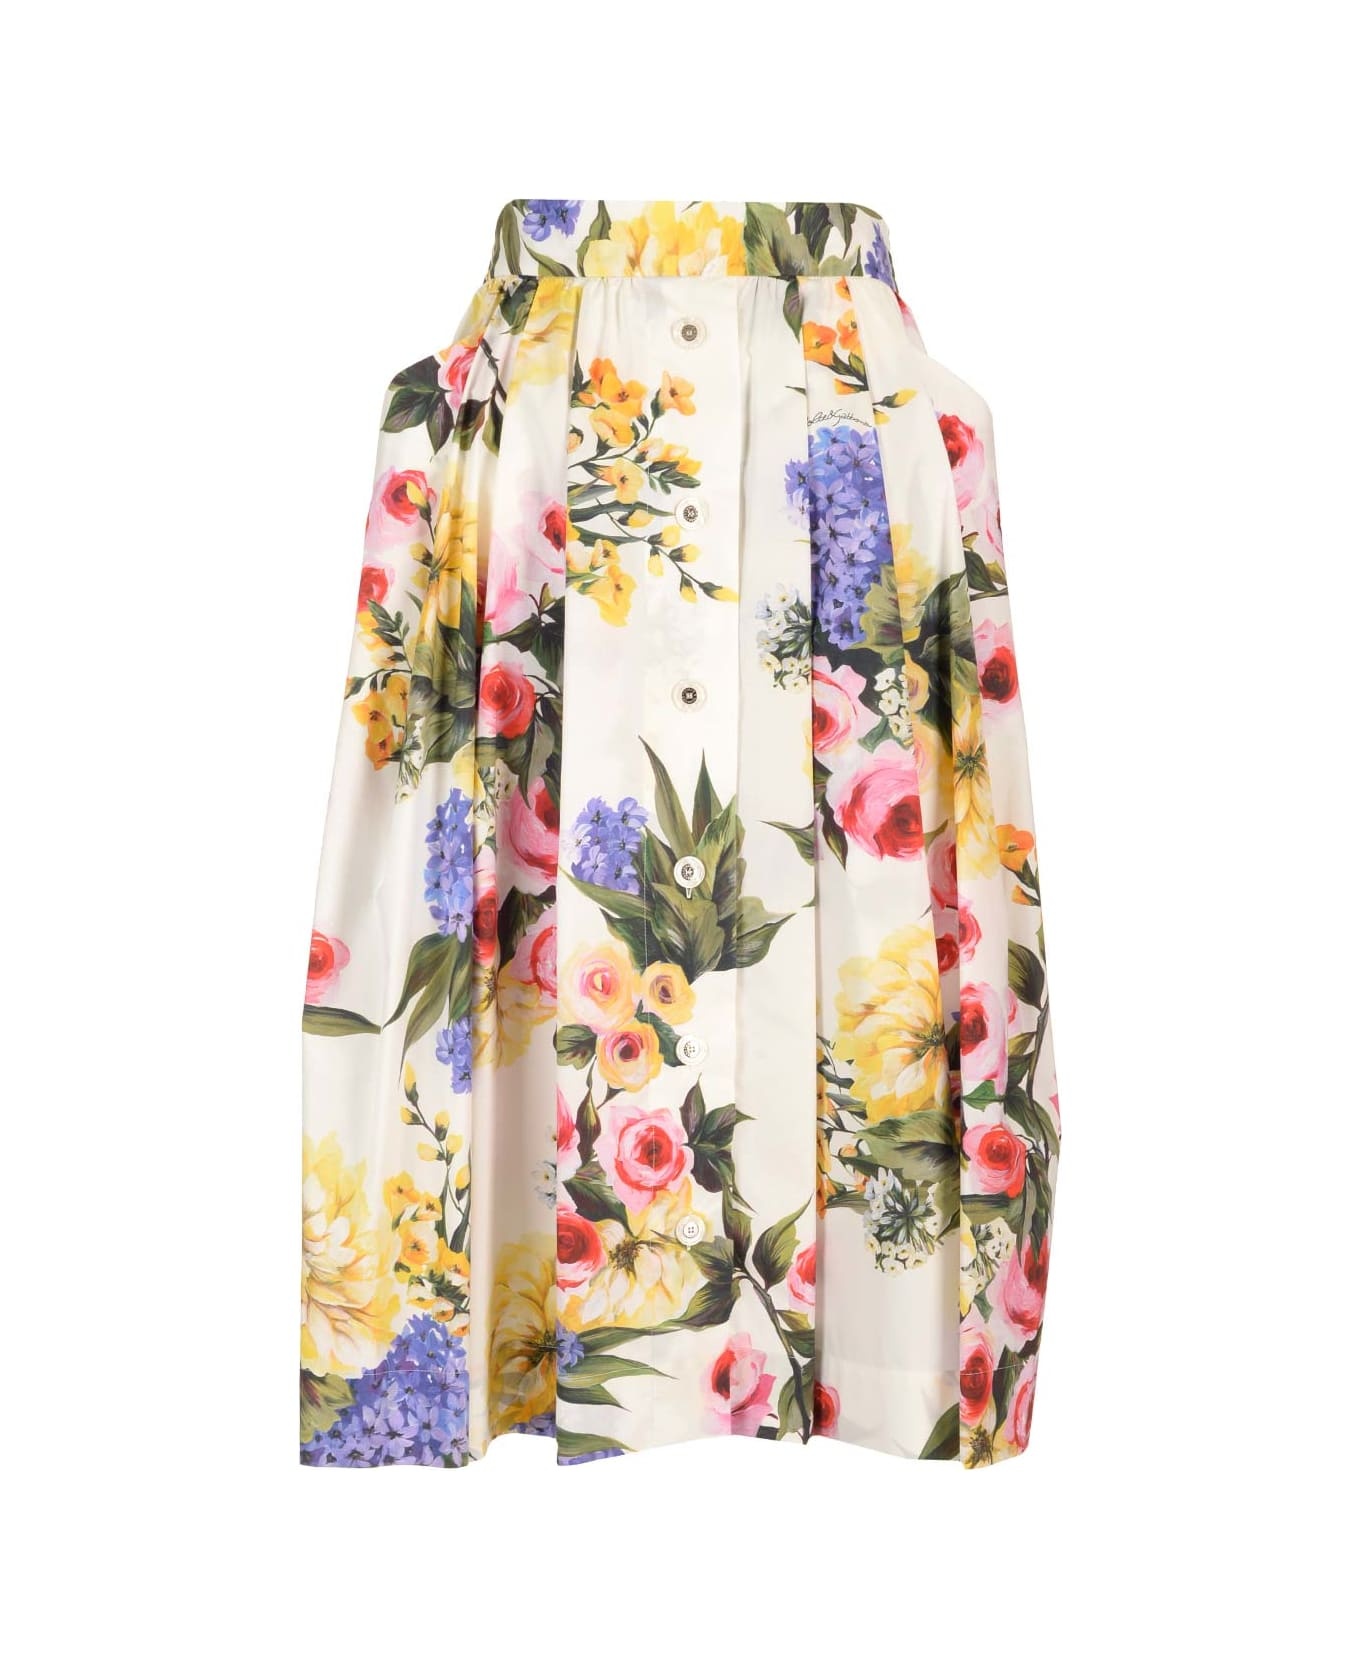 Floral Print Skirt - 1